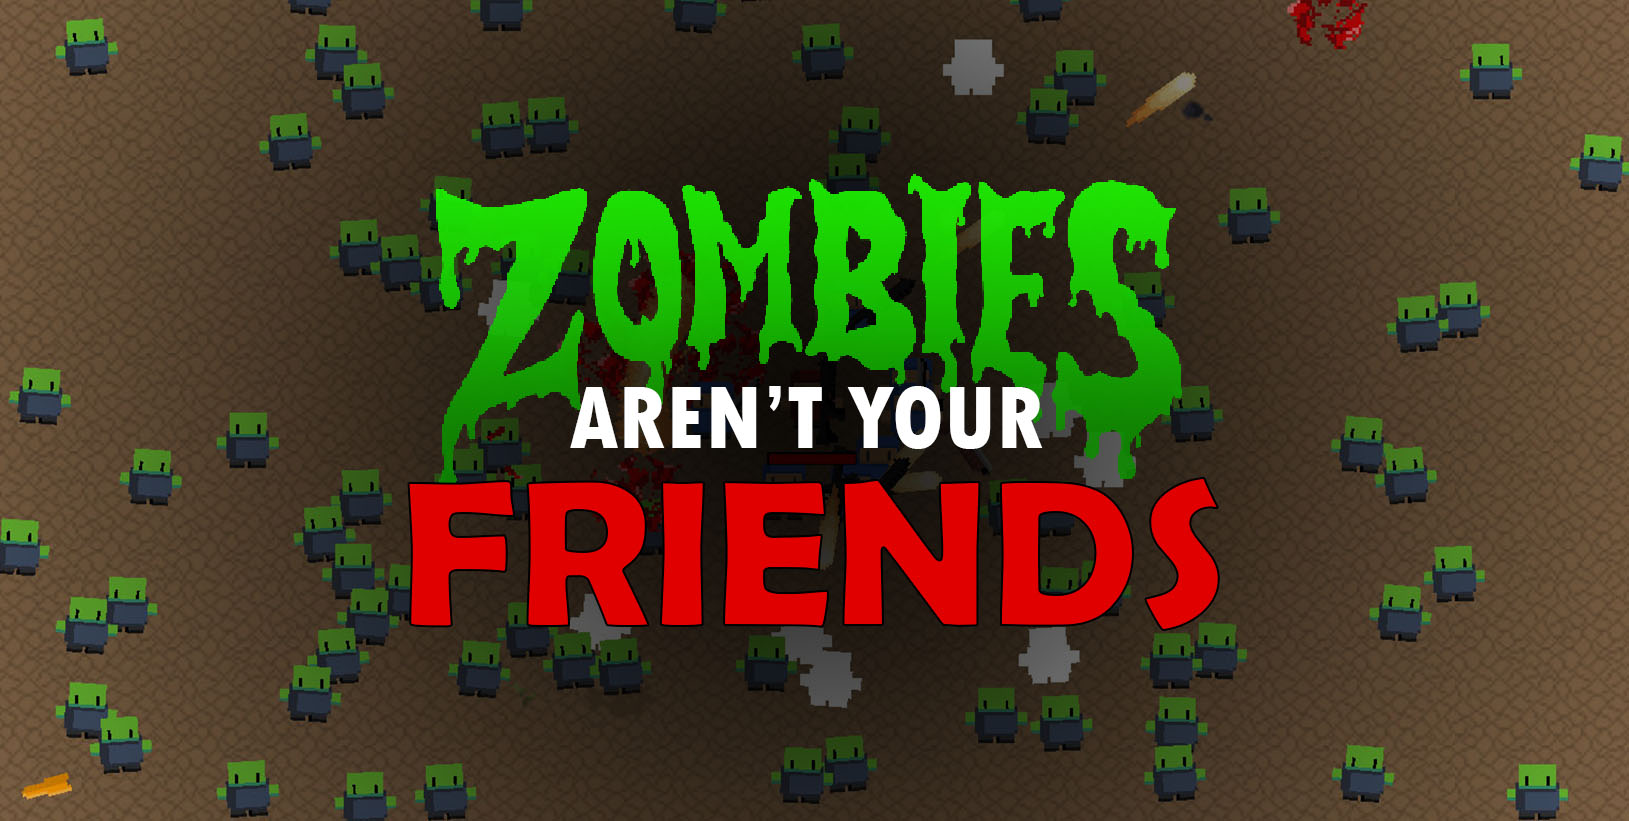 Zombies Aren't Your Friends